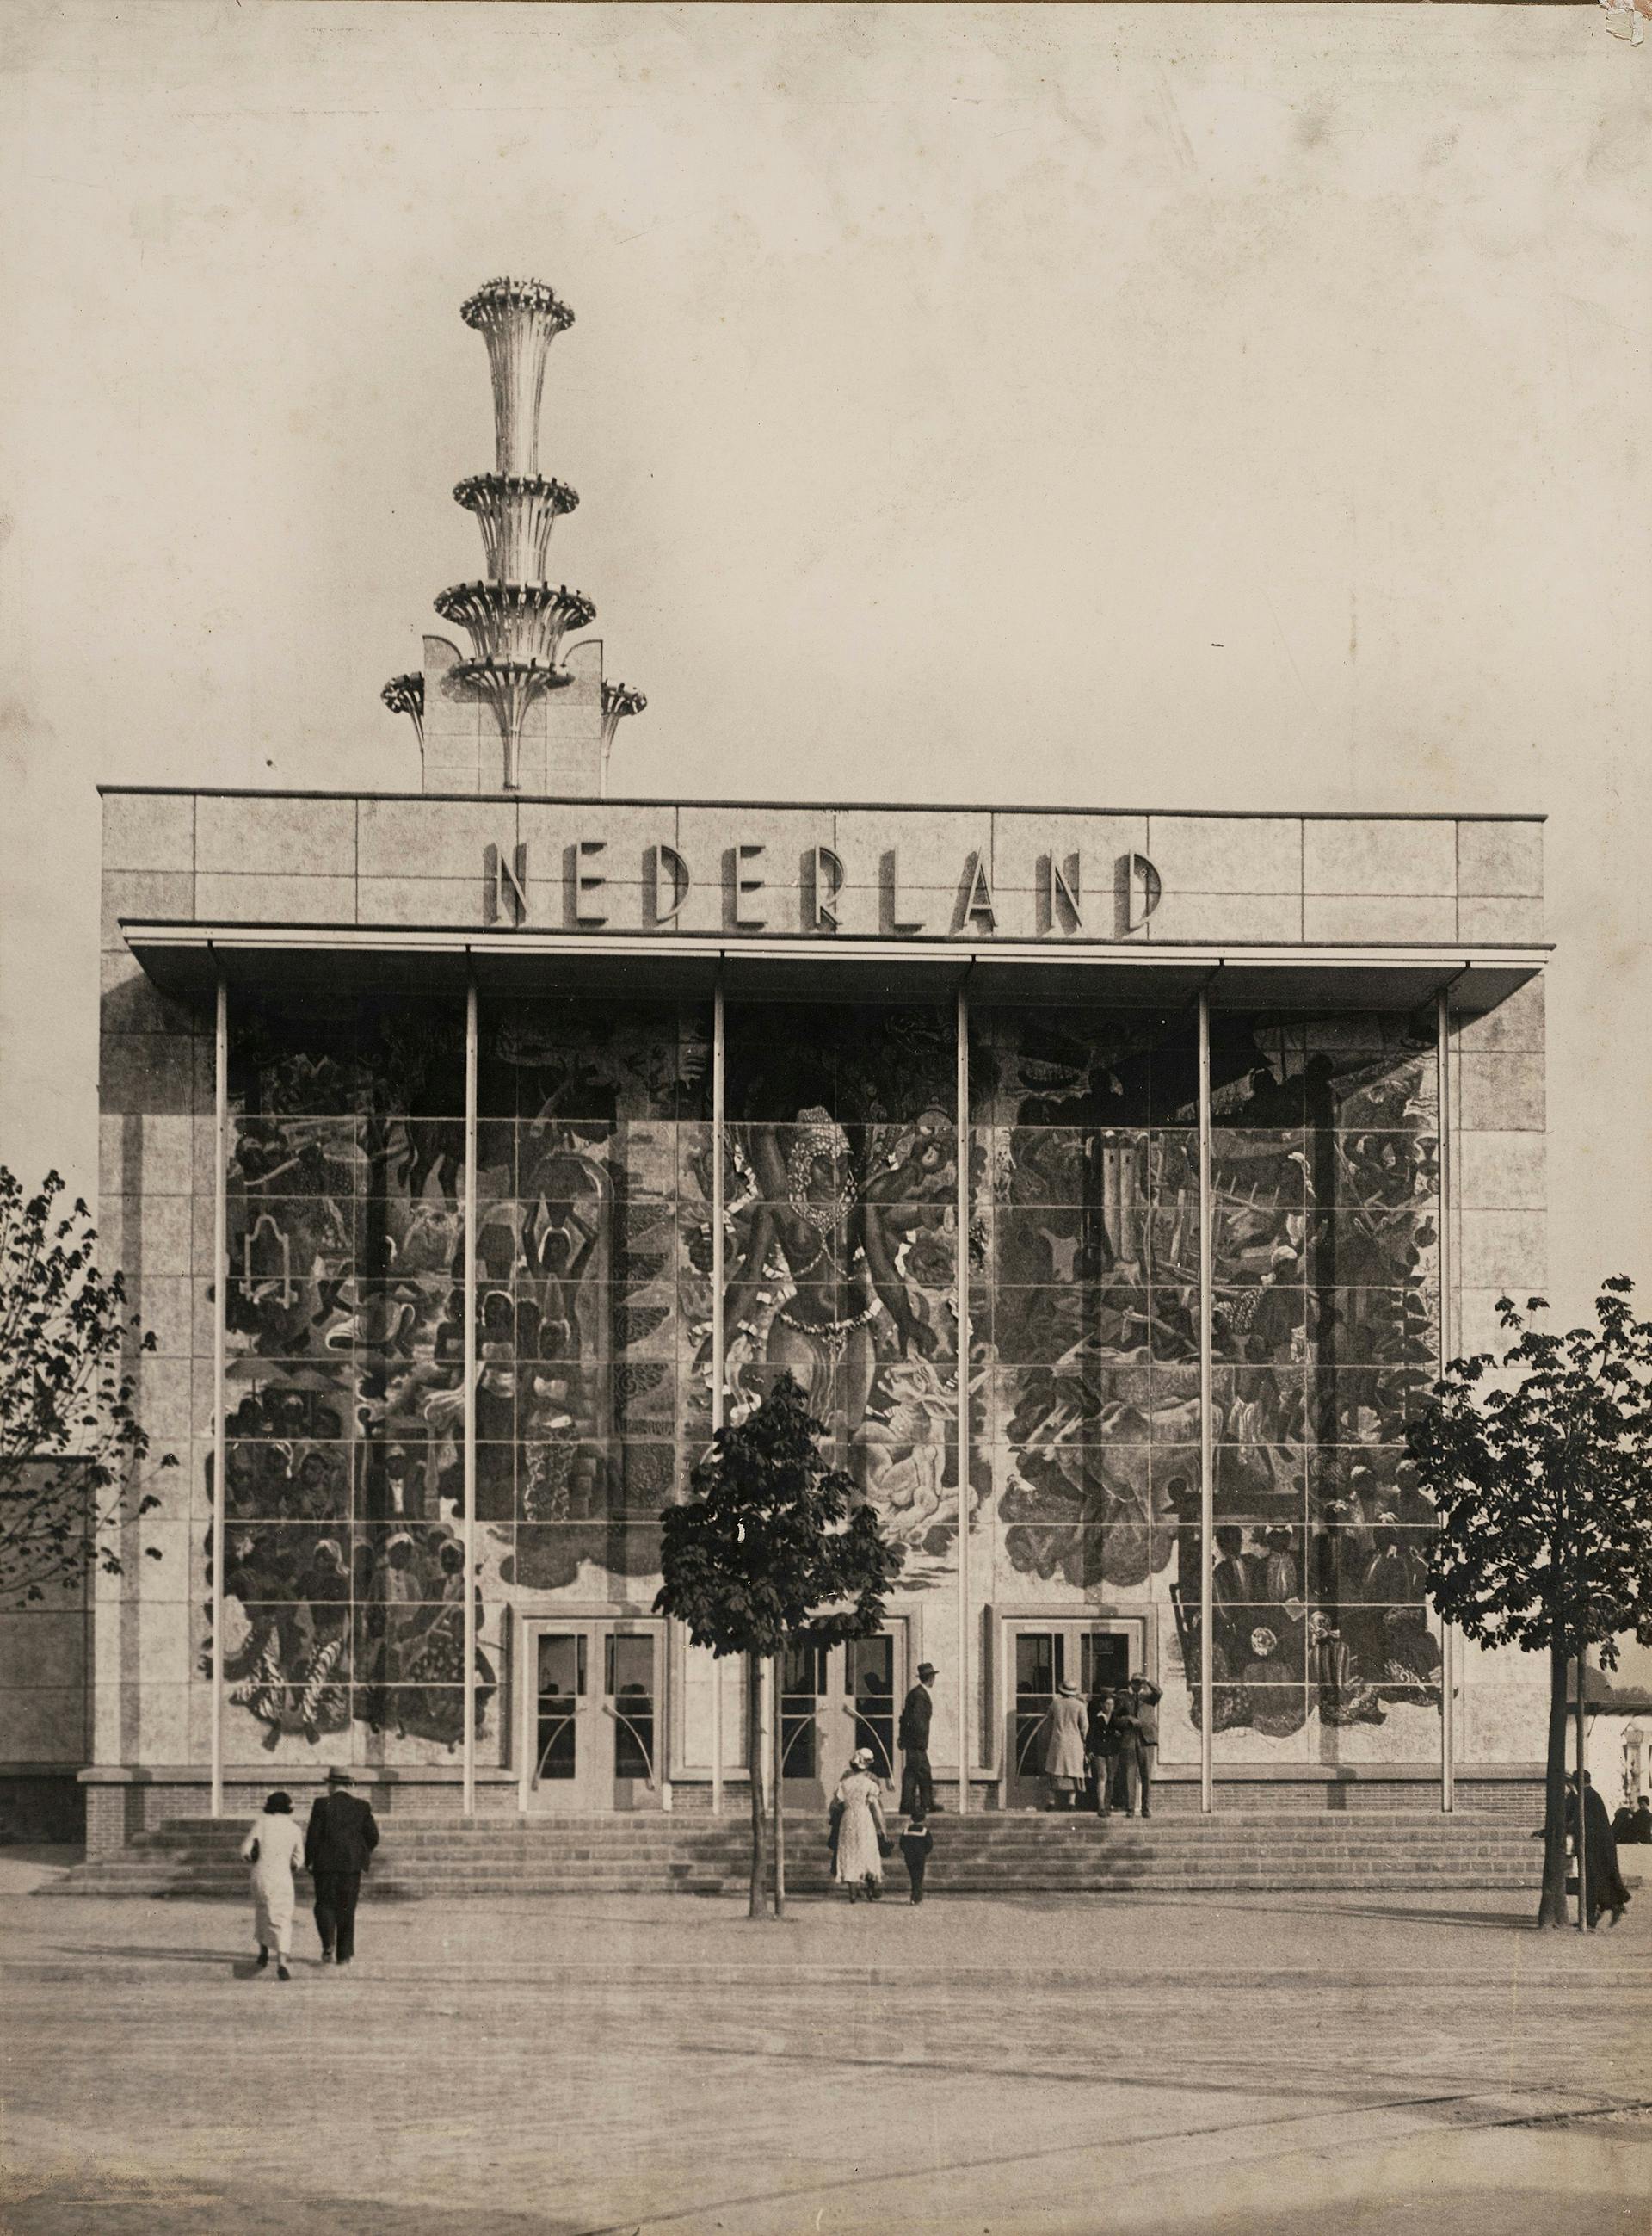  Dutch pavilion World Expo Brussels, Belgium, 1935. Architect: D. Roosenburg. Photographer unknown. Collection Het Nieuwe Instituut. 